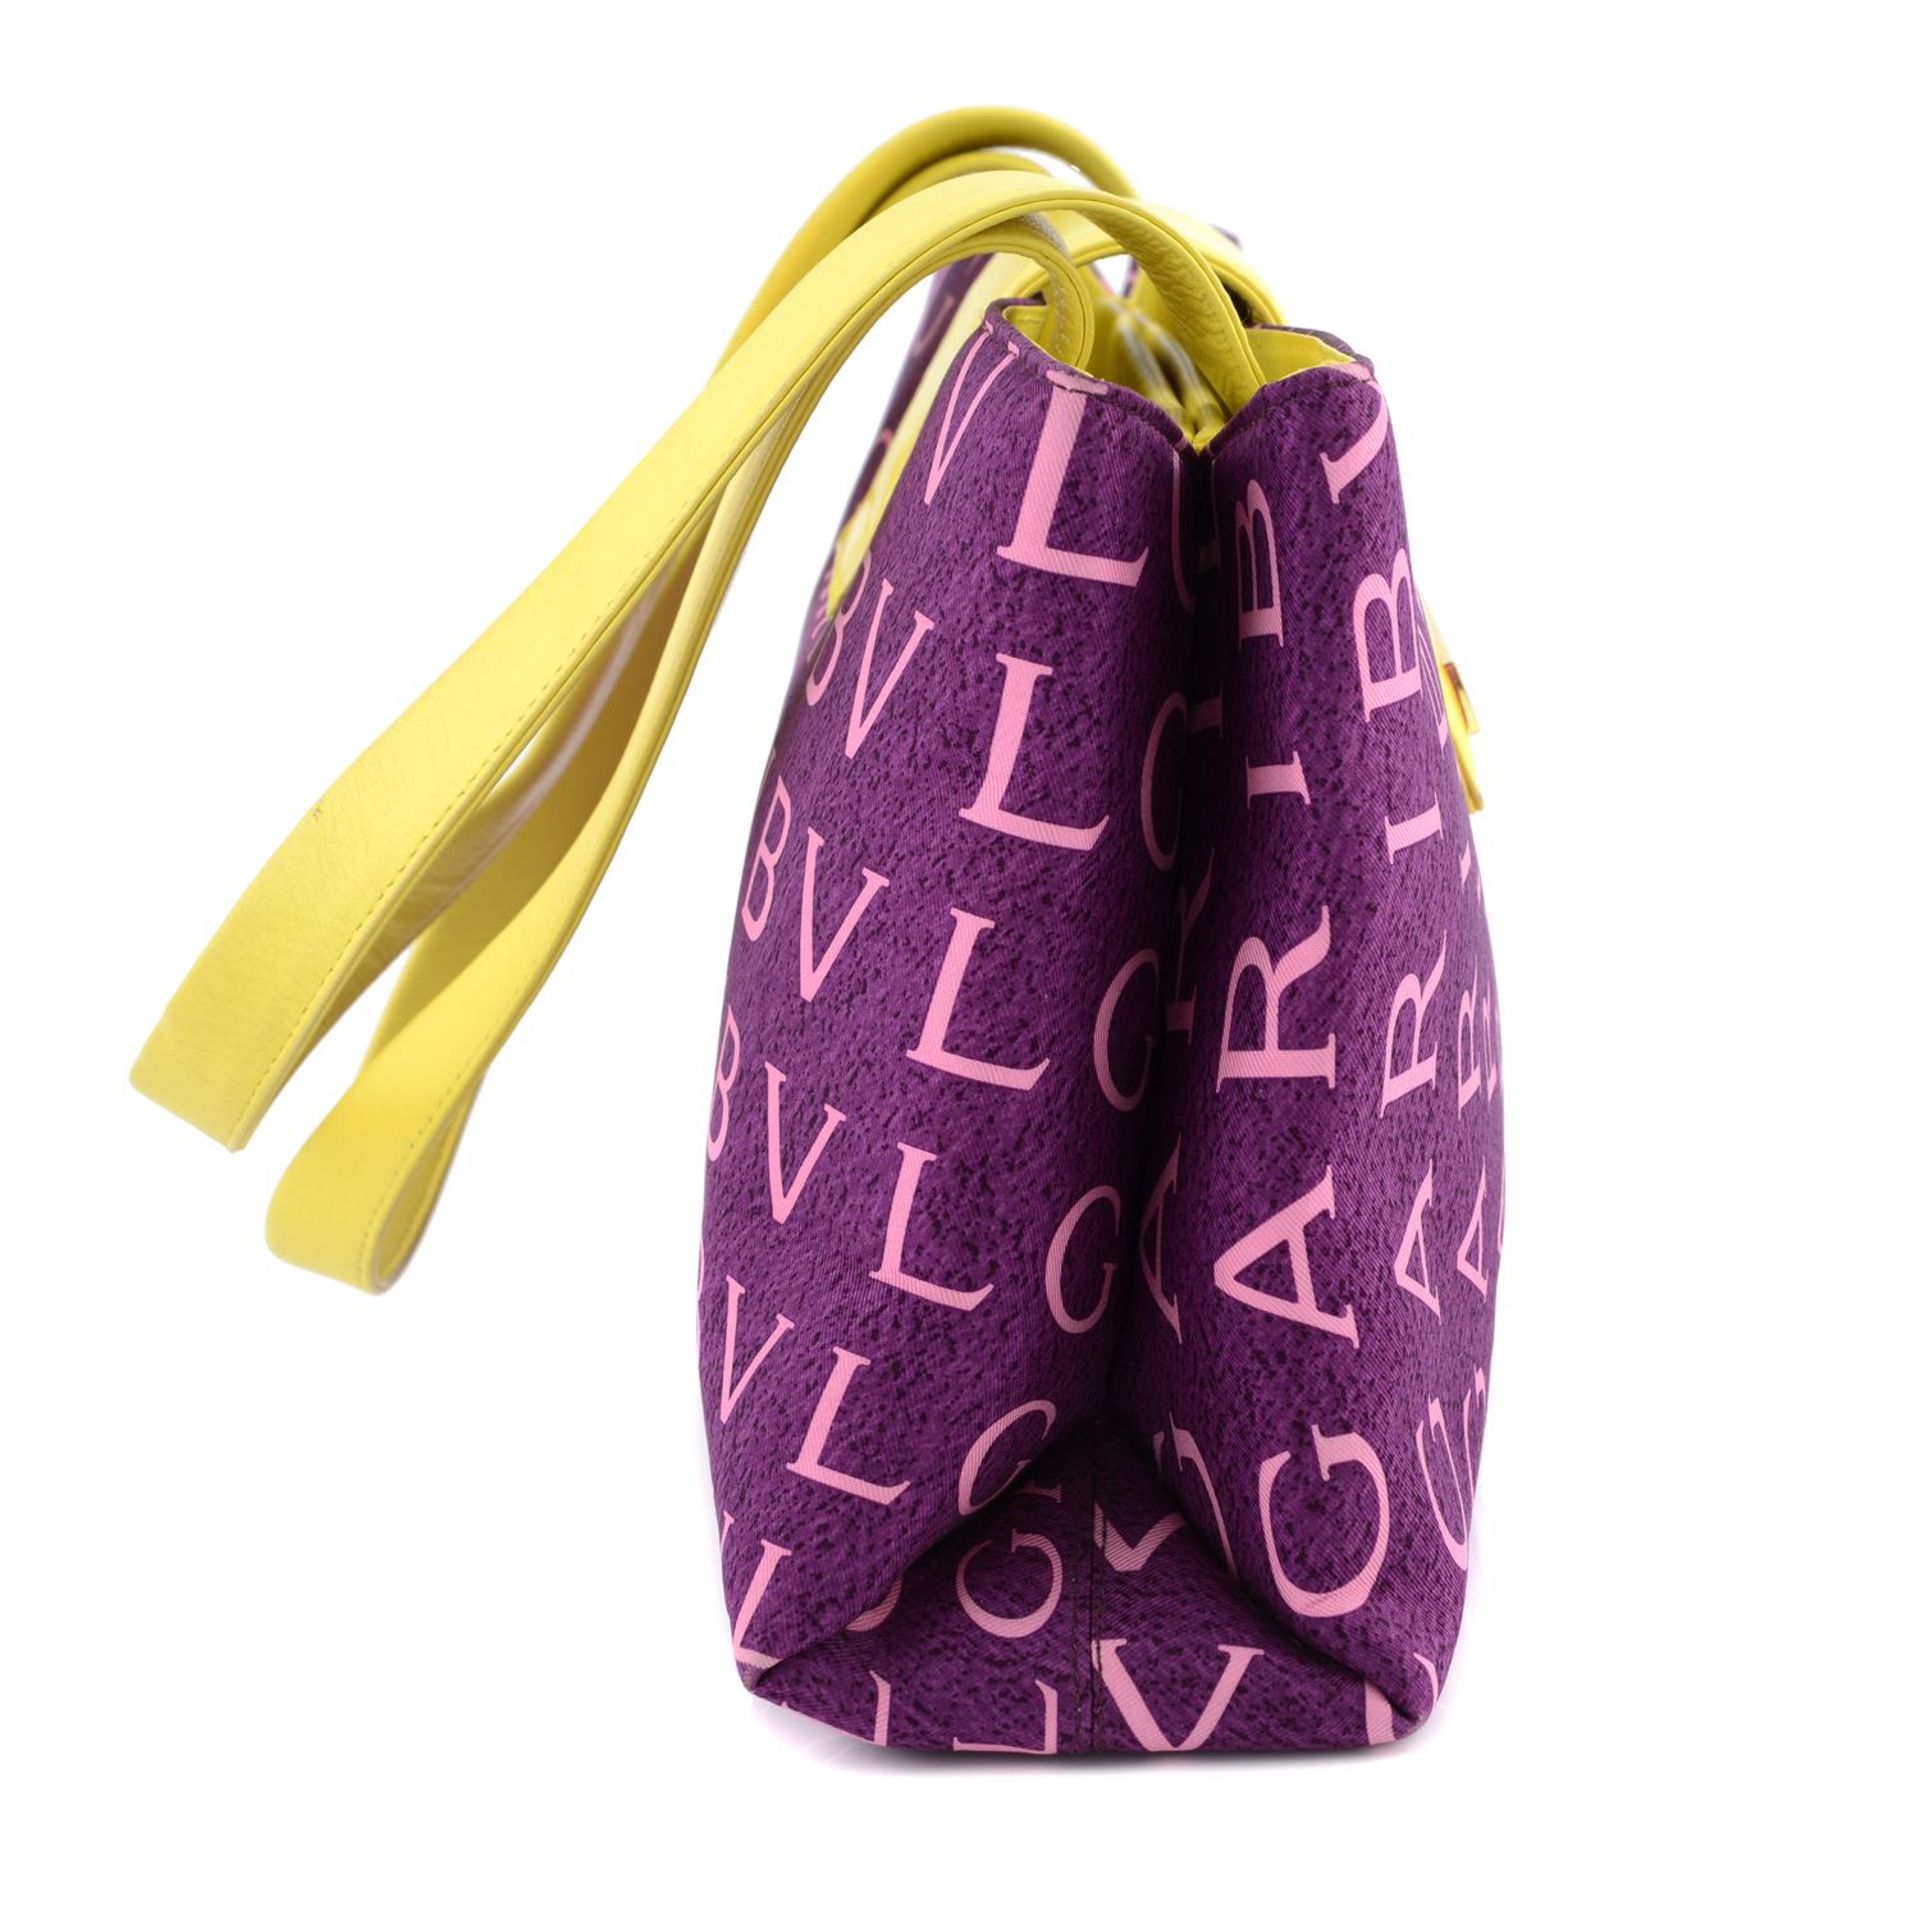 BULGARI - a purple monogram handbag. - Image 3 of 4